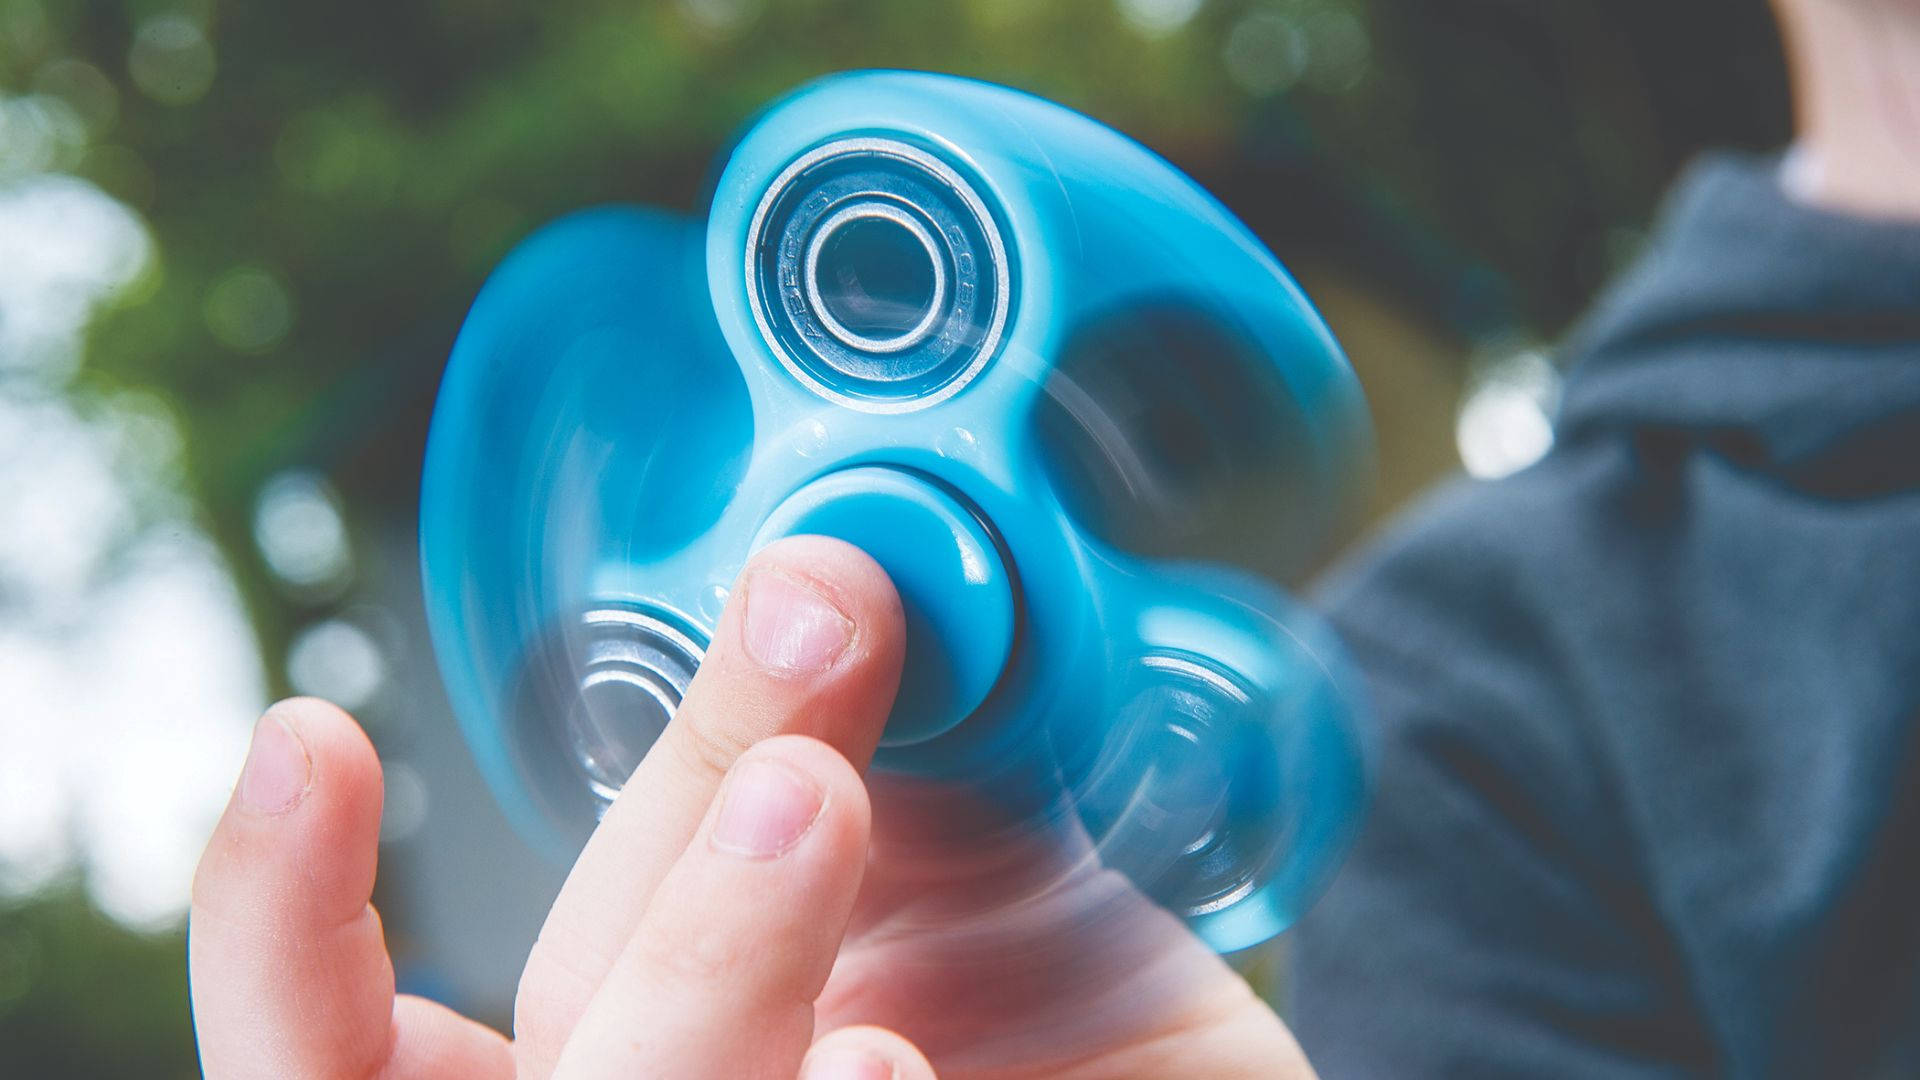 Spinning Blue Fidget Toy Background